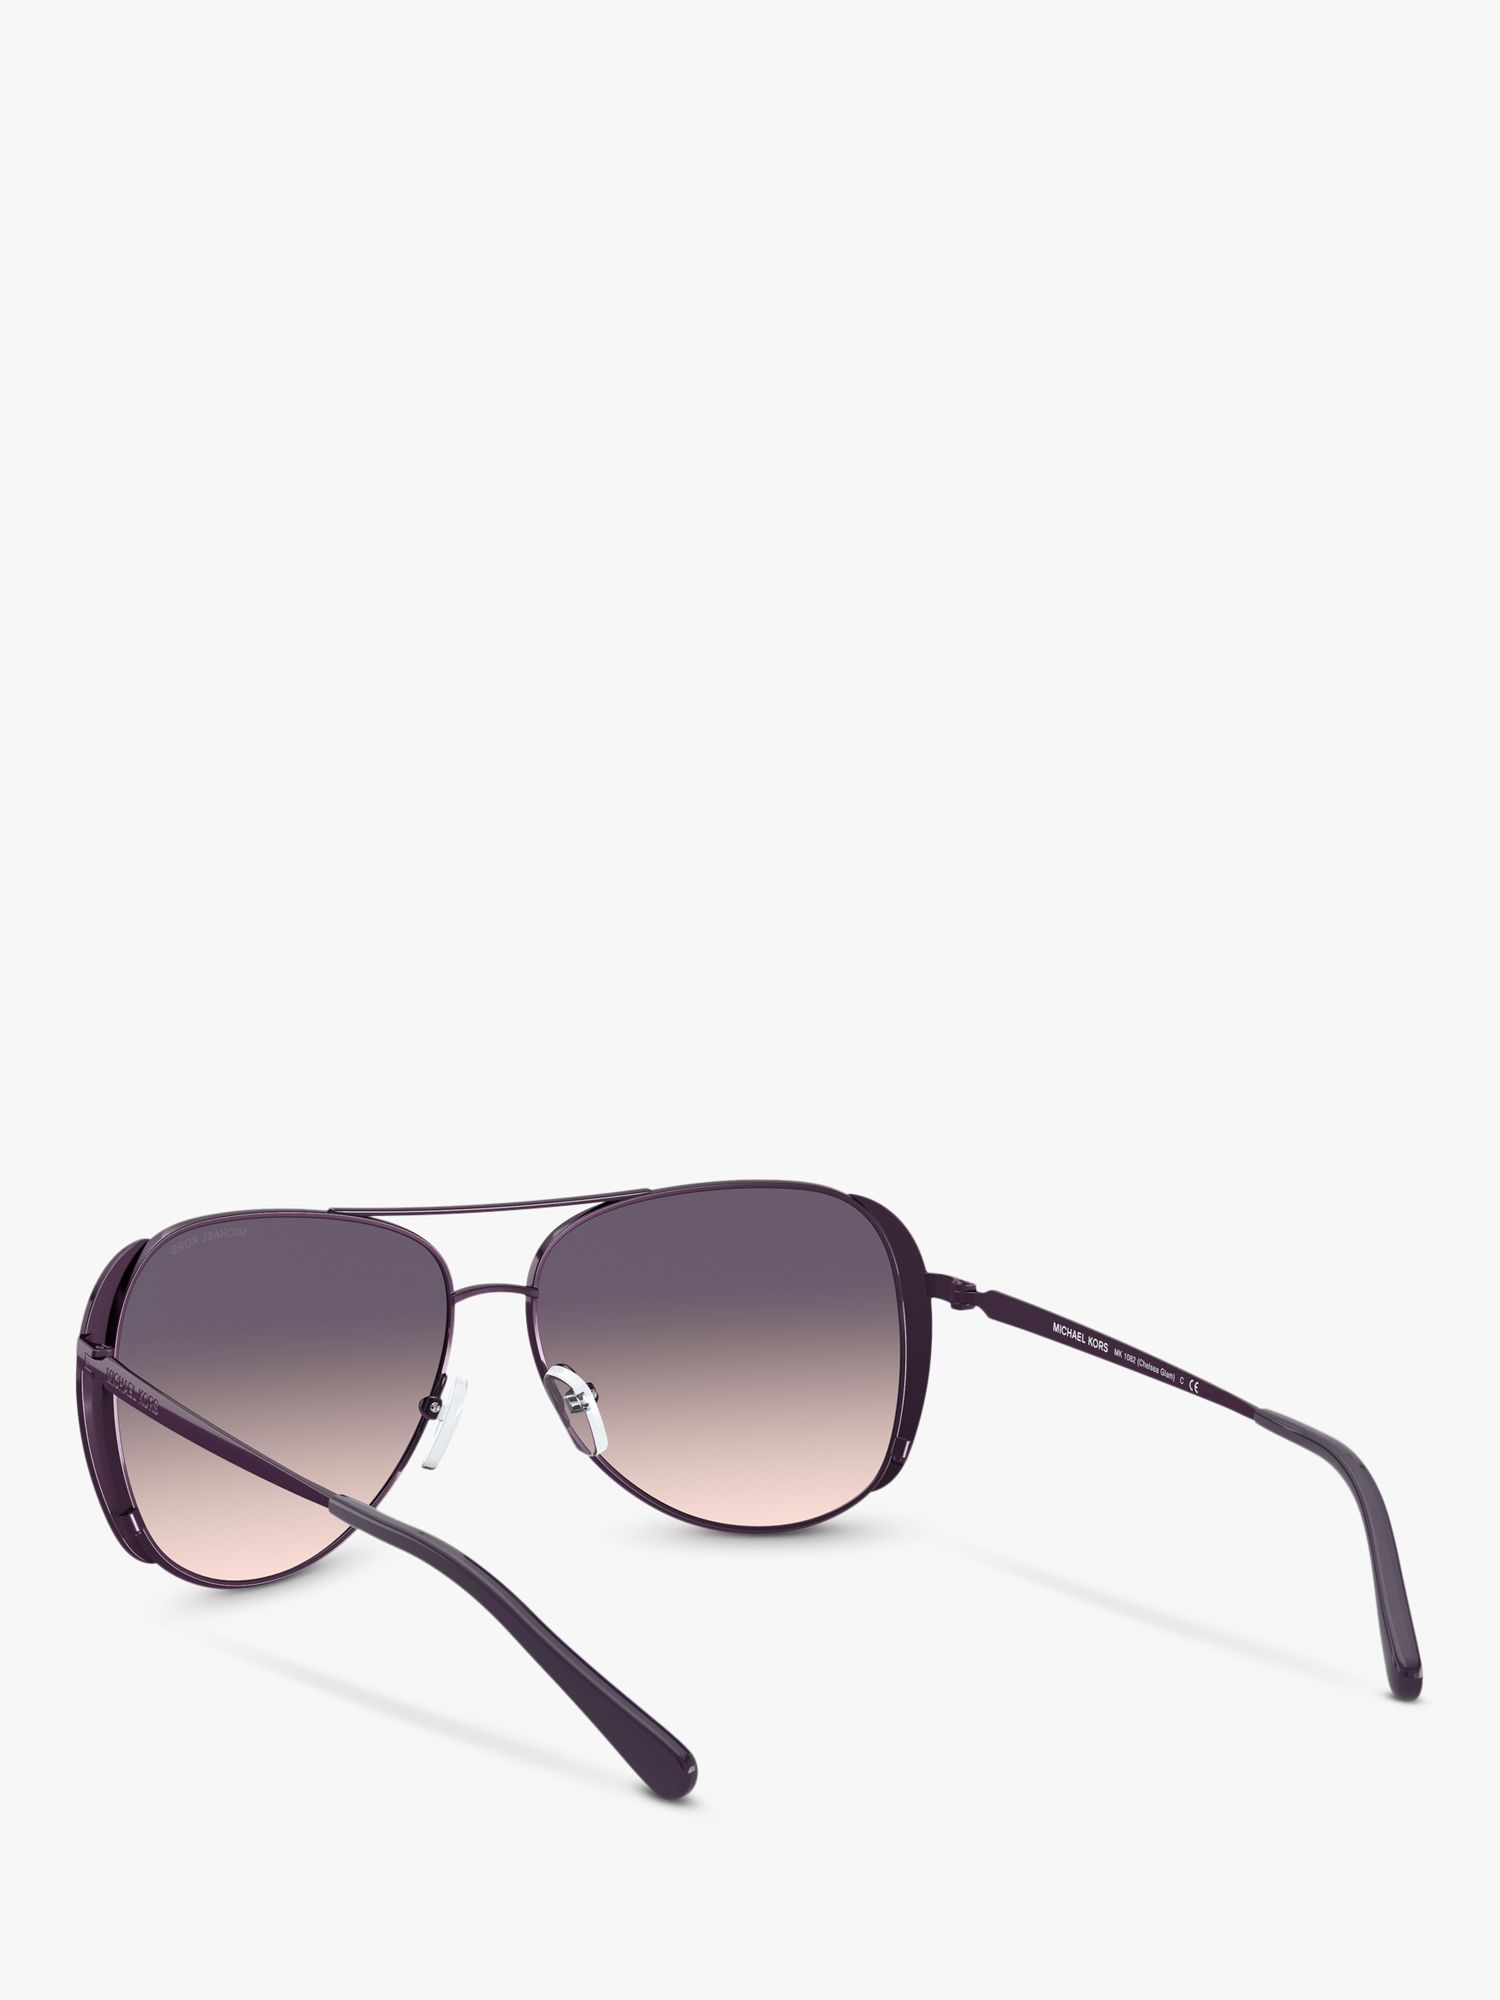 Michael Kors Mk1082 Chelsea Glam Women S Pilot Sunglasses Iris Iris Clear Gradient